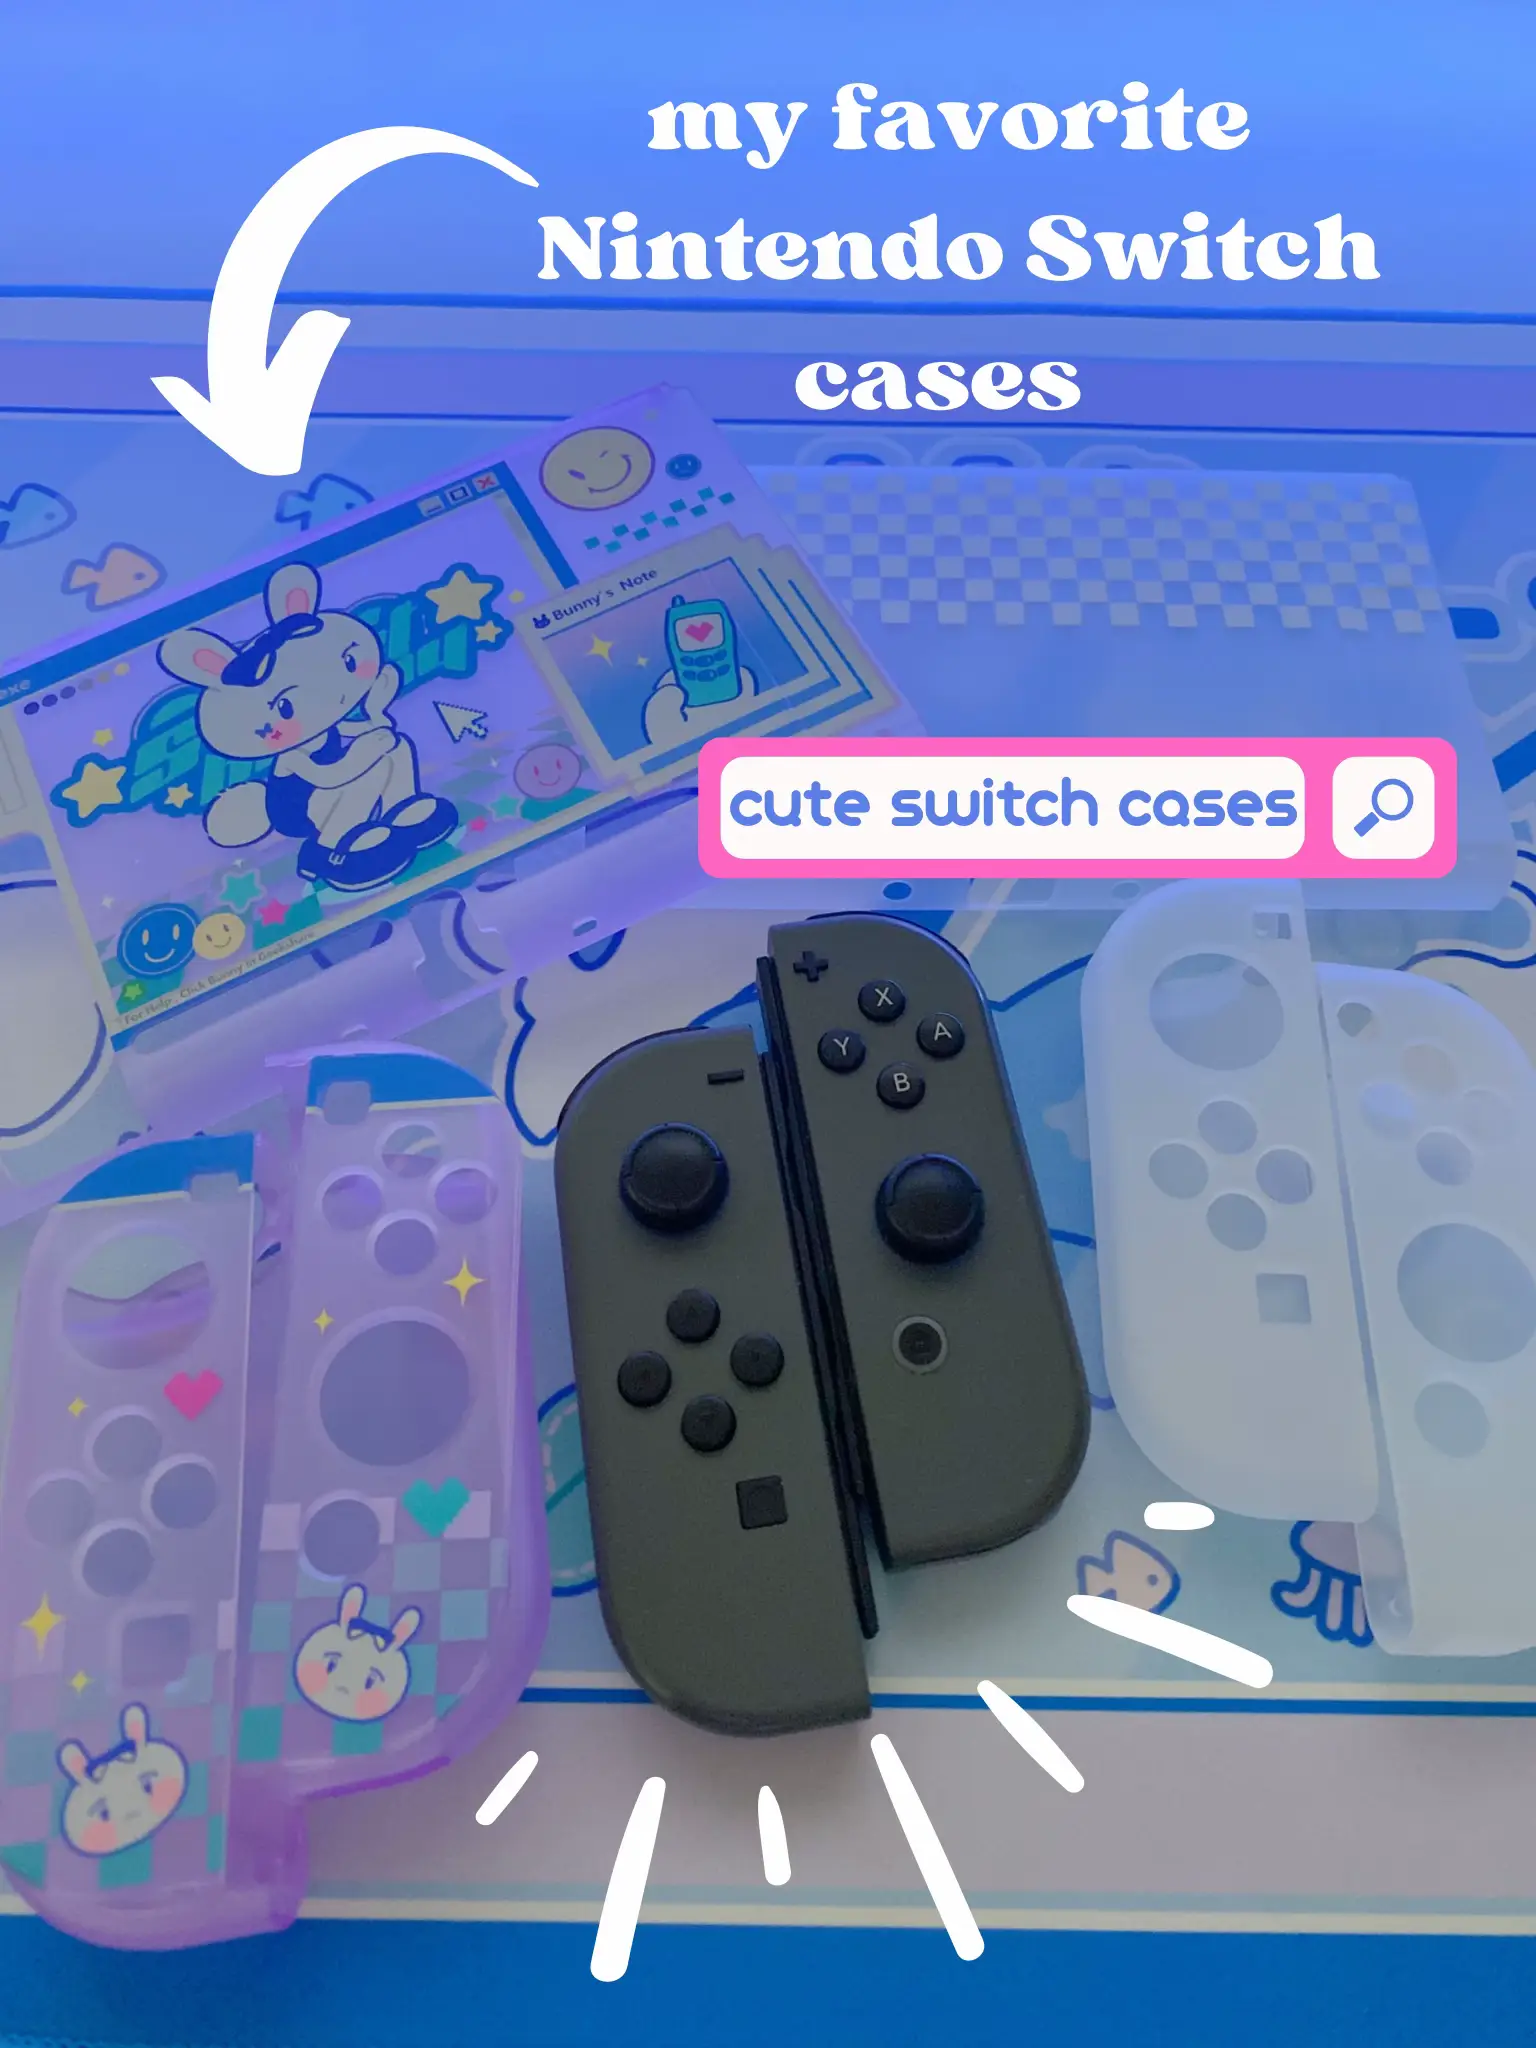 Demon Slayer Inspired Nintendo Switch Joy-Con Controllers